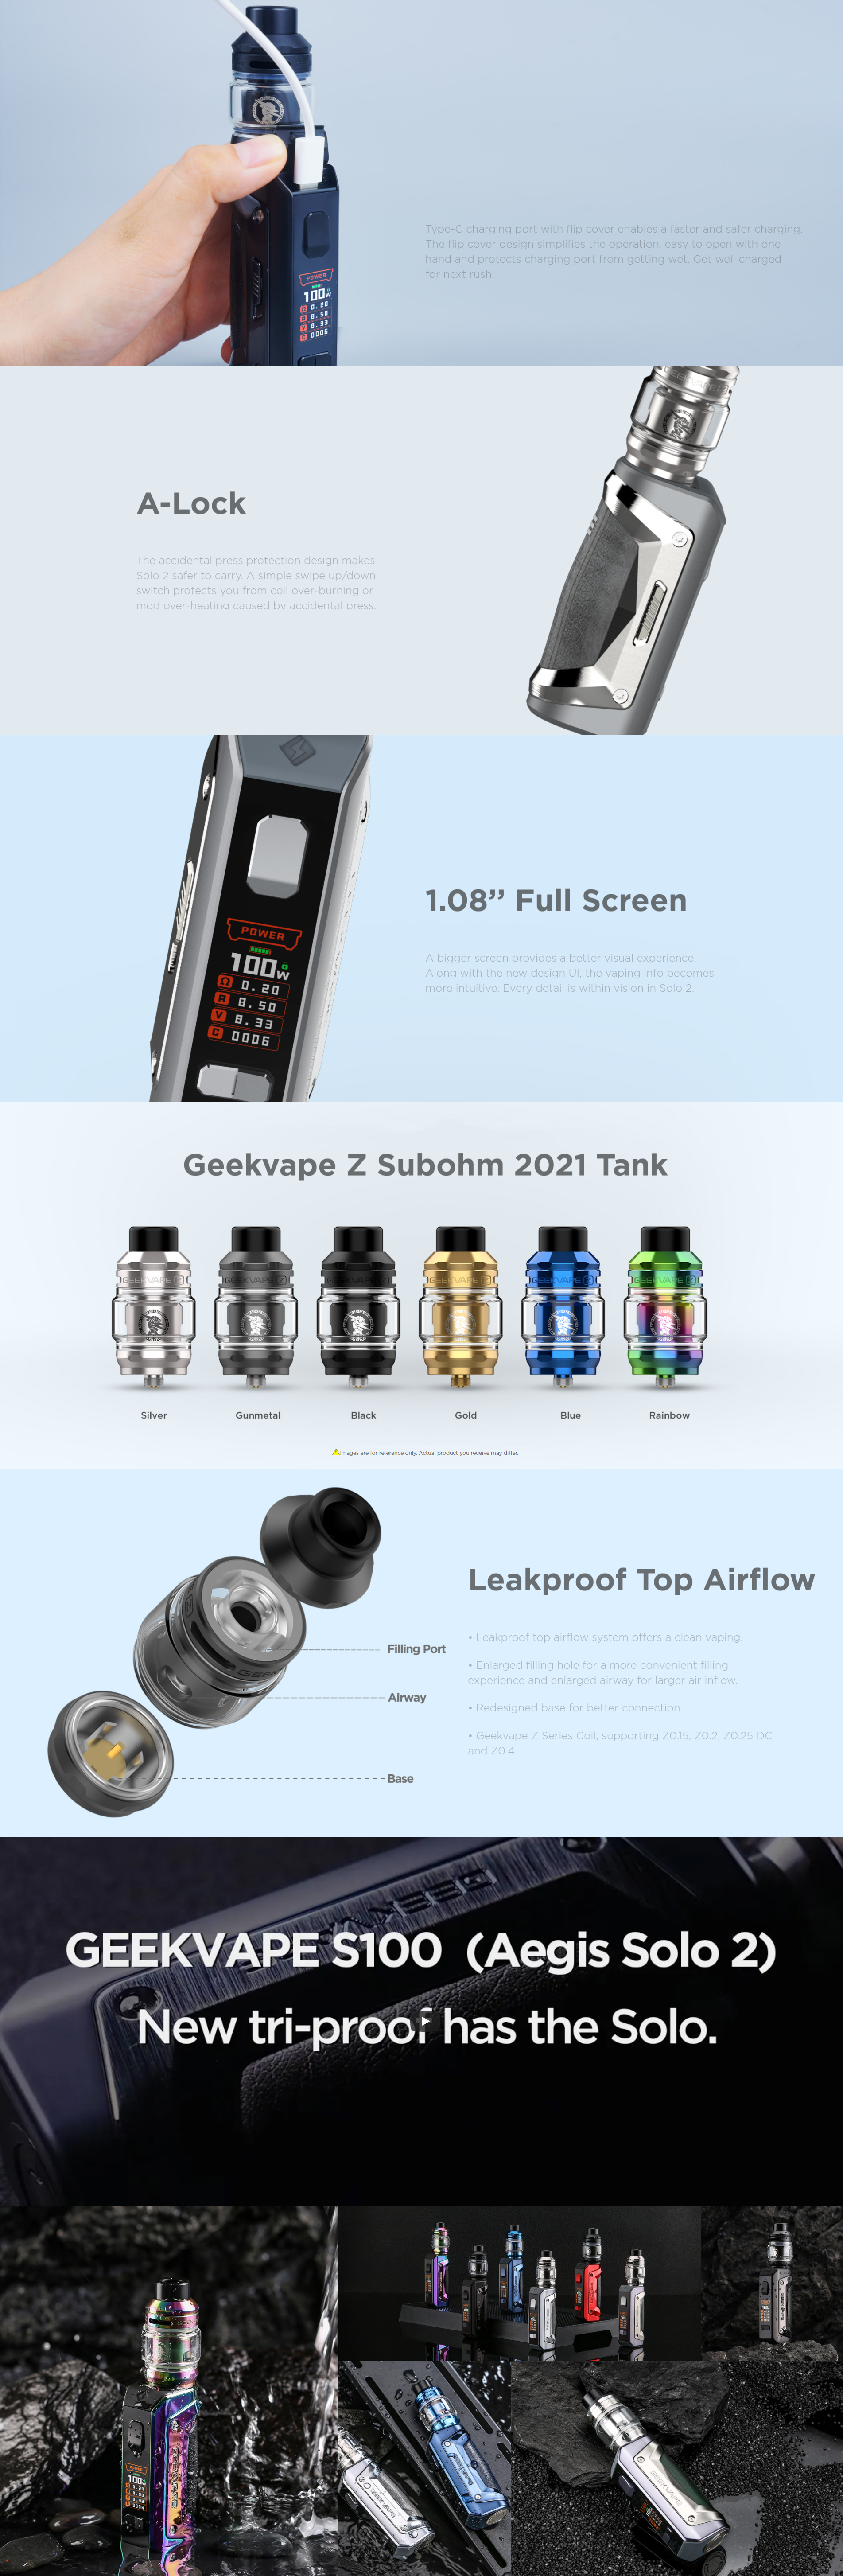 Geekvape S100 Kit1 2 1 (1)